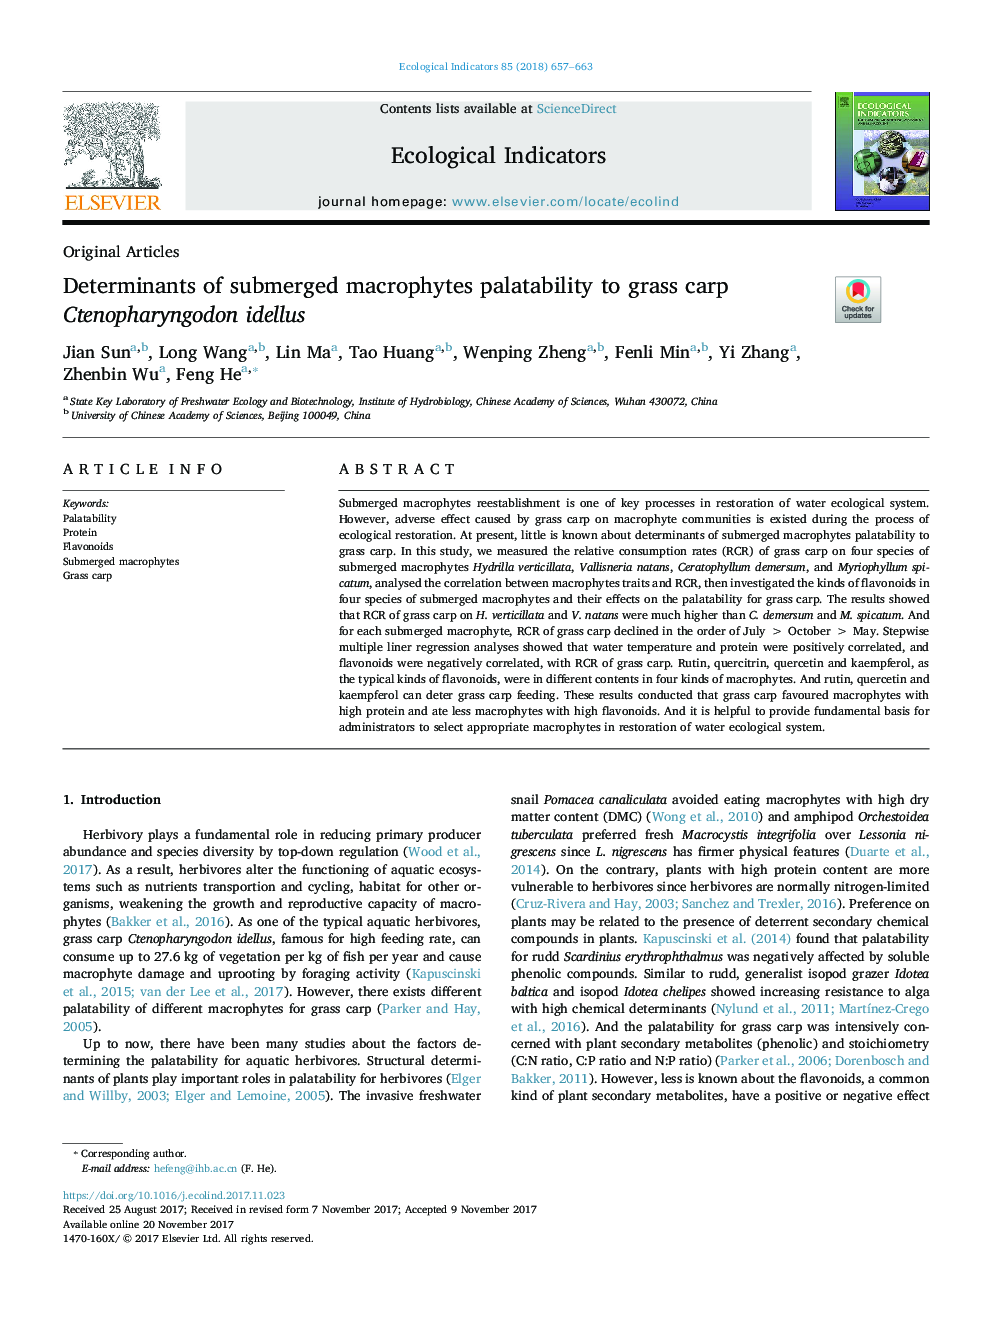 Determinants of submerged macrophytes palatability to grass carp Ctenopharyngodon idellus